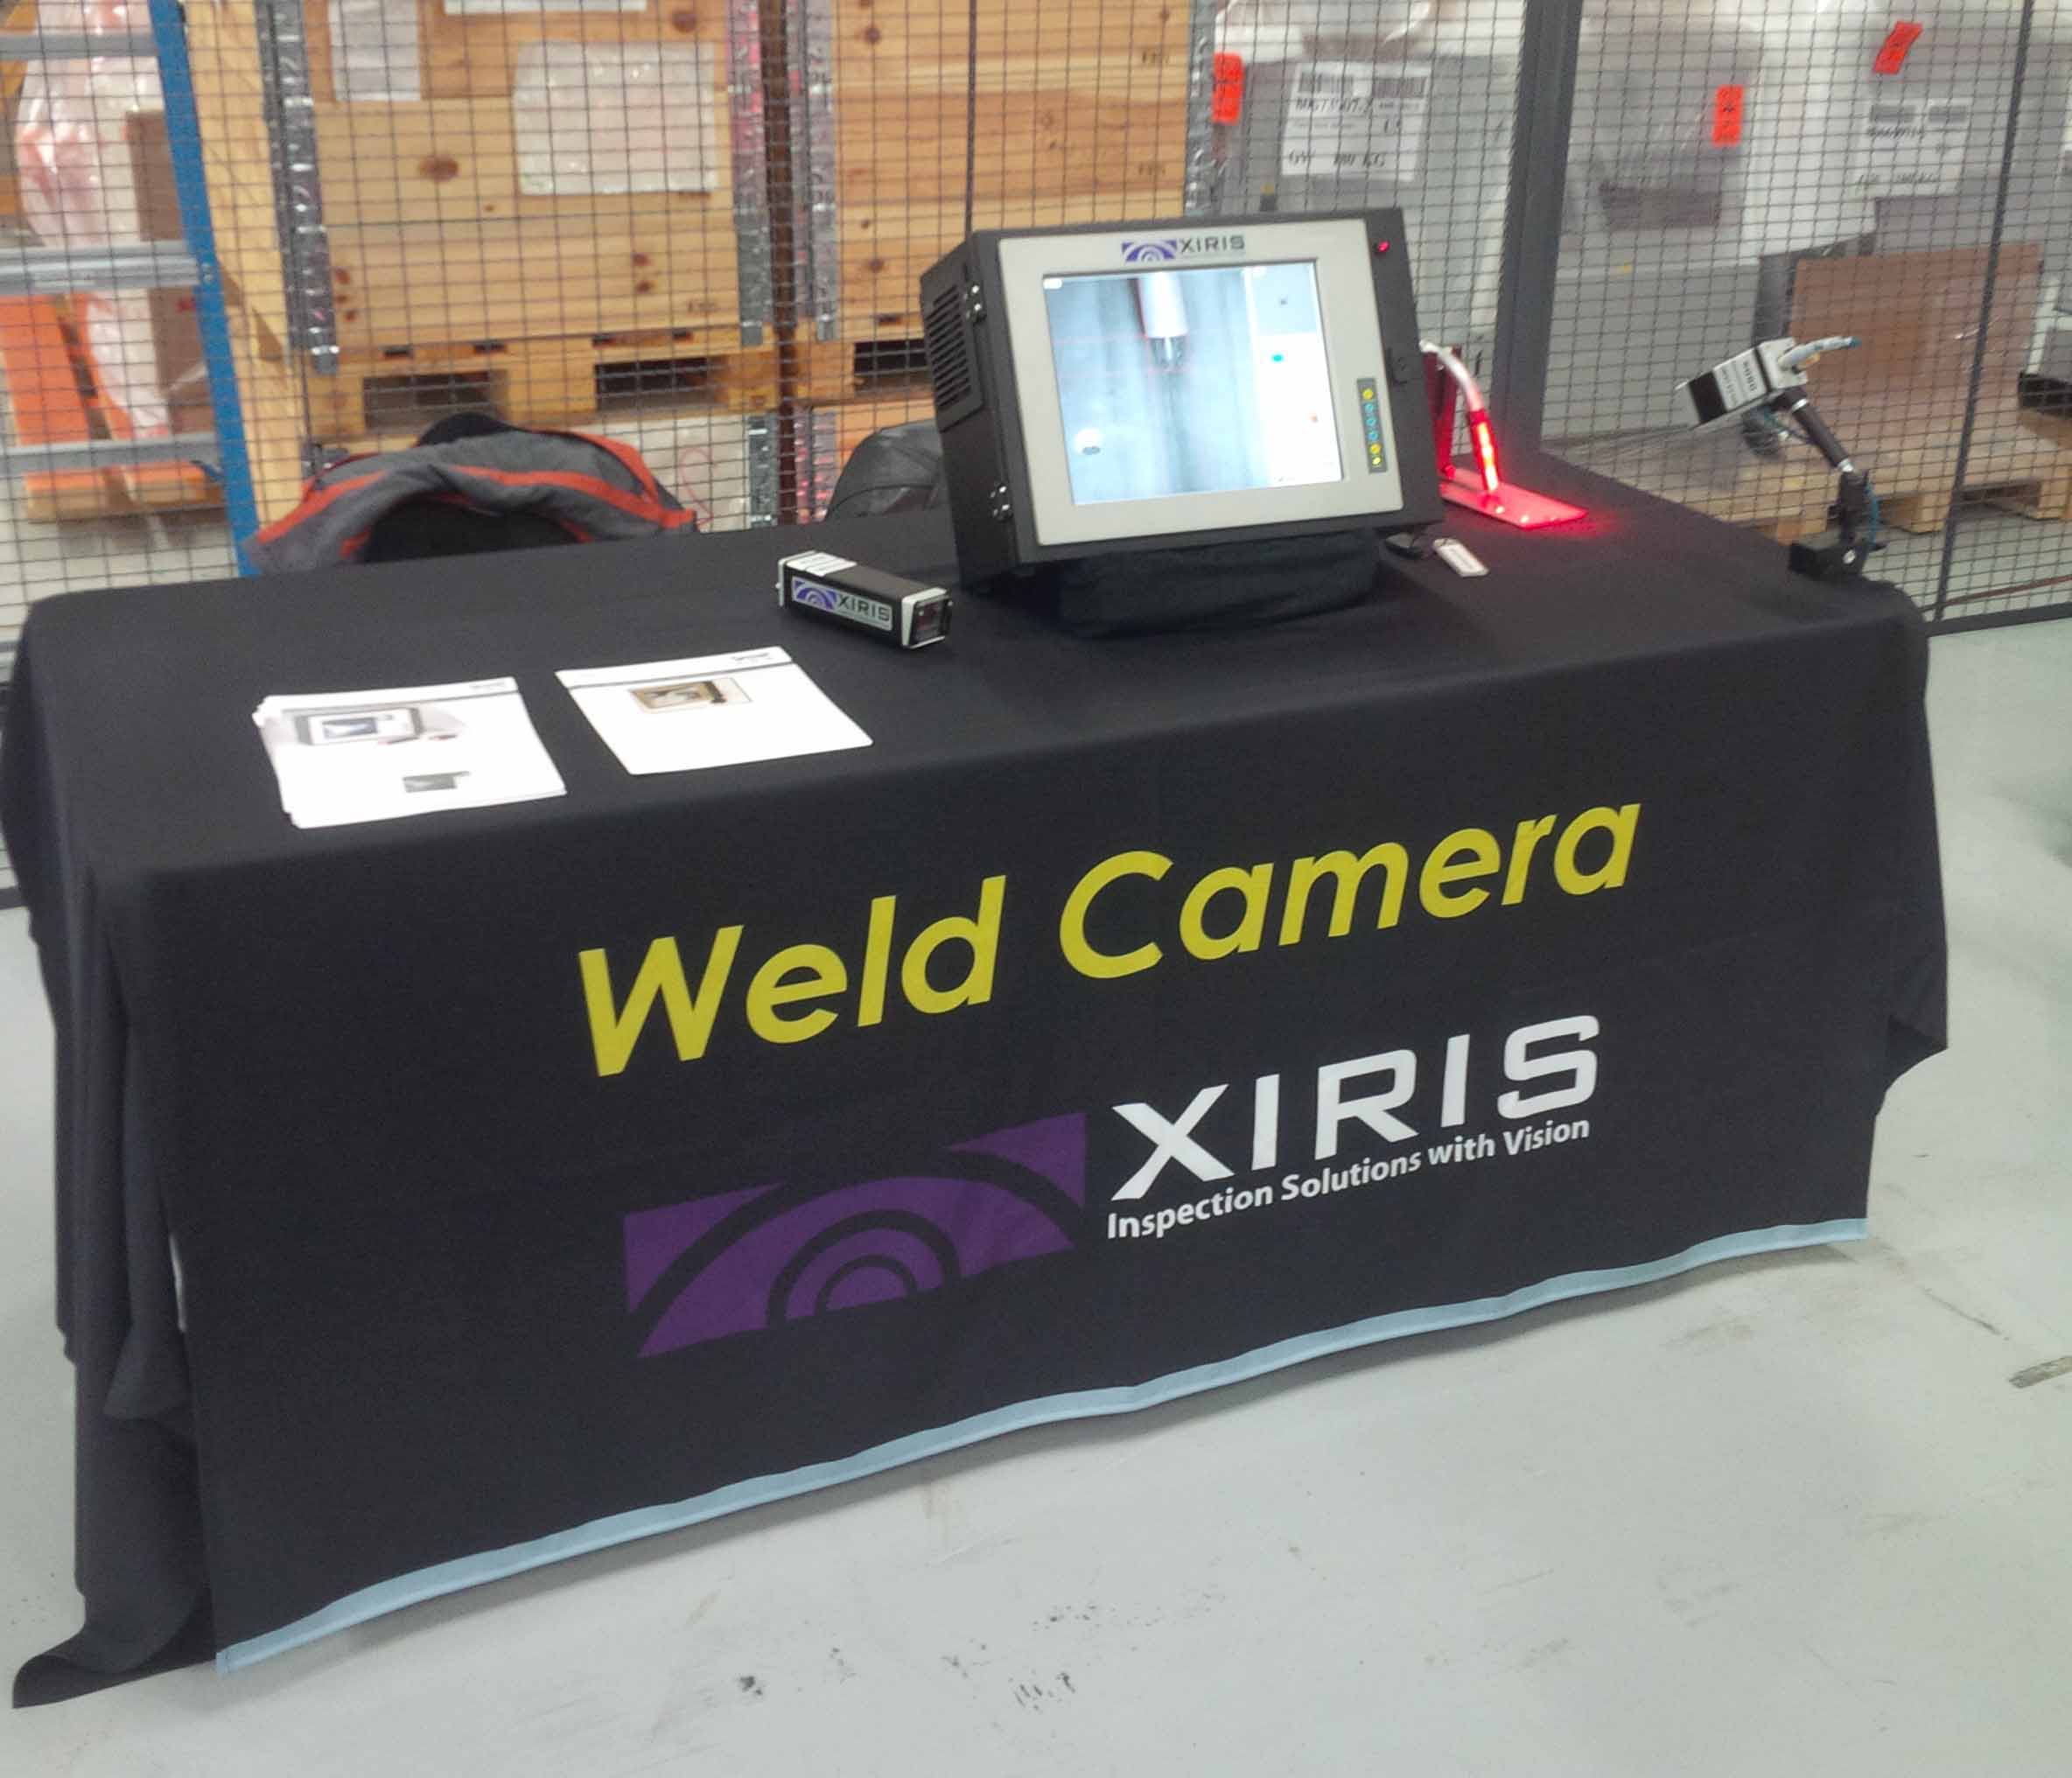 Xiris Weld Camera Demonstration at ABB